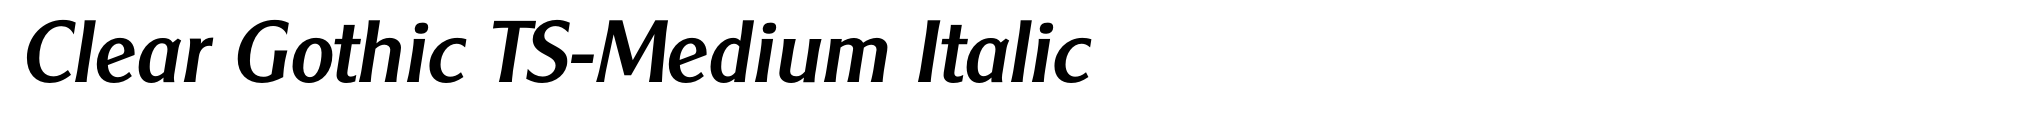 Clear Gothic TS-Medium Italic image